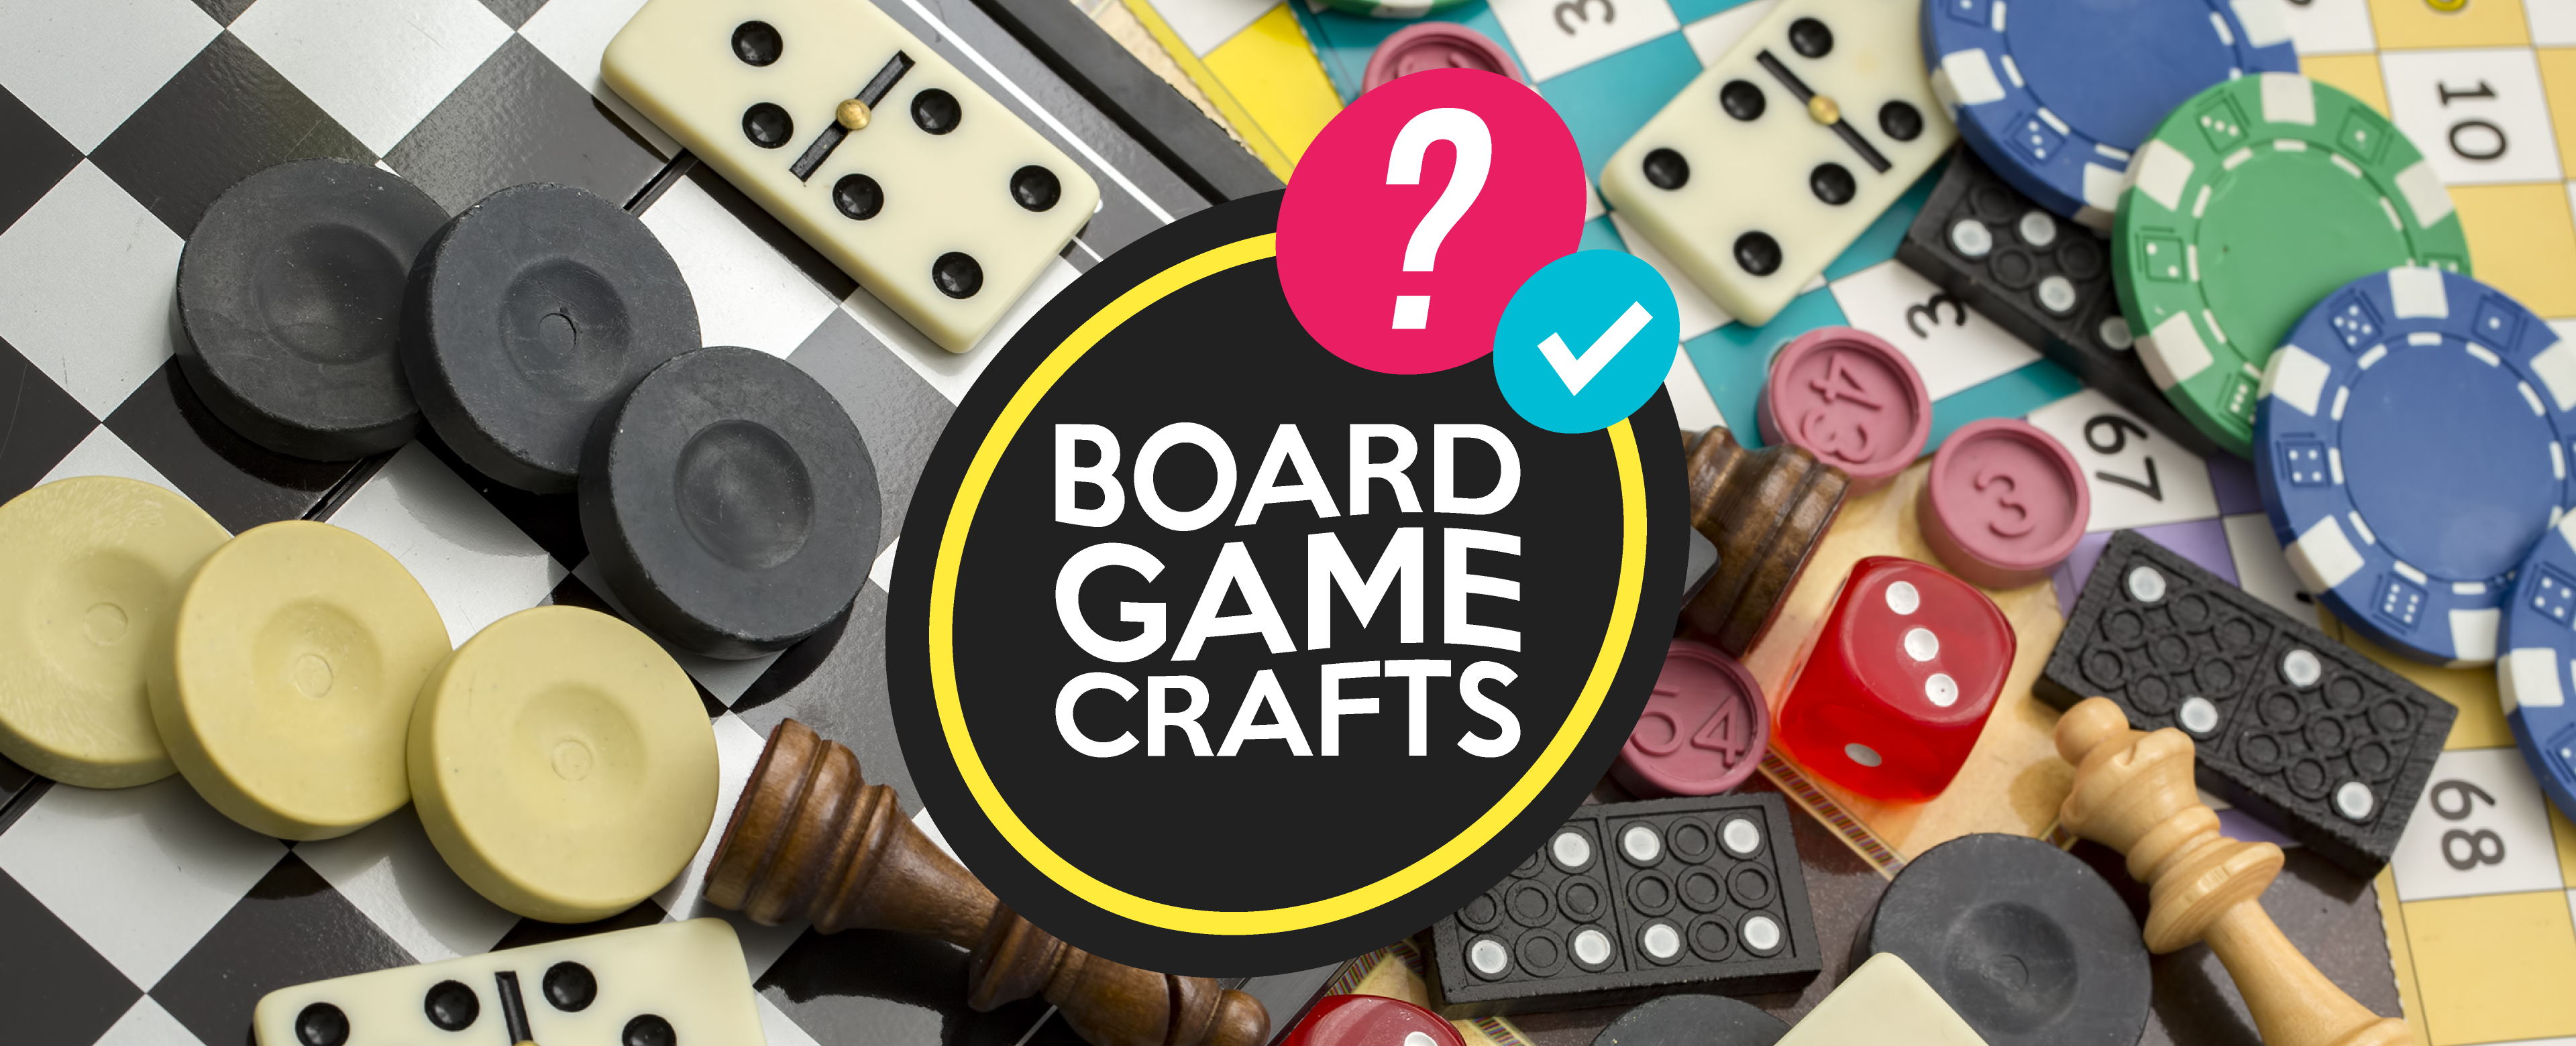 Canceled - Board Game Crafts 